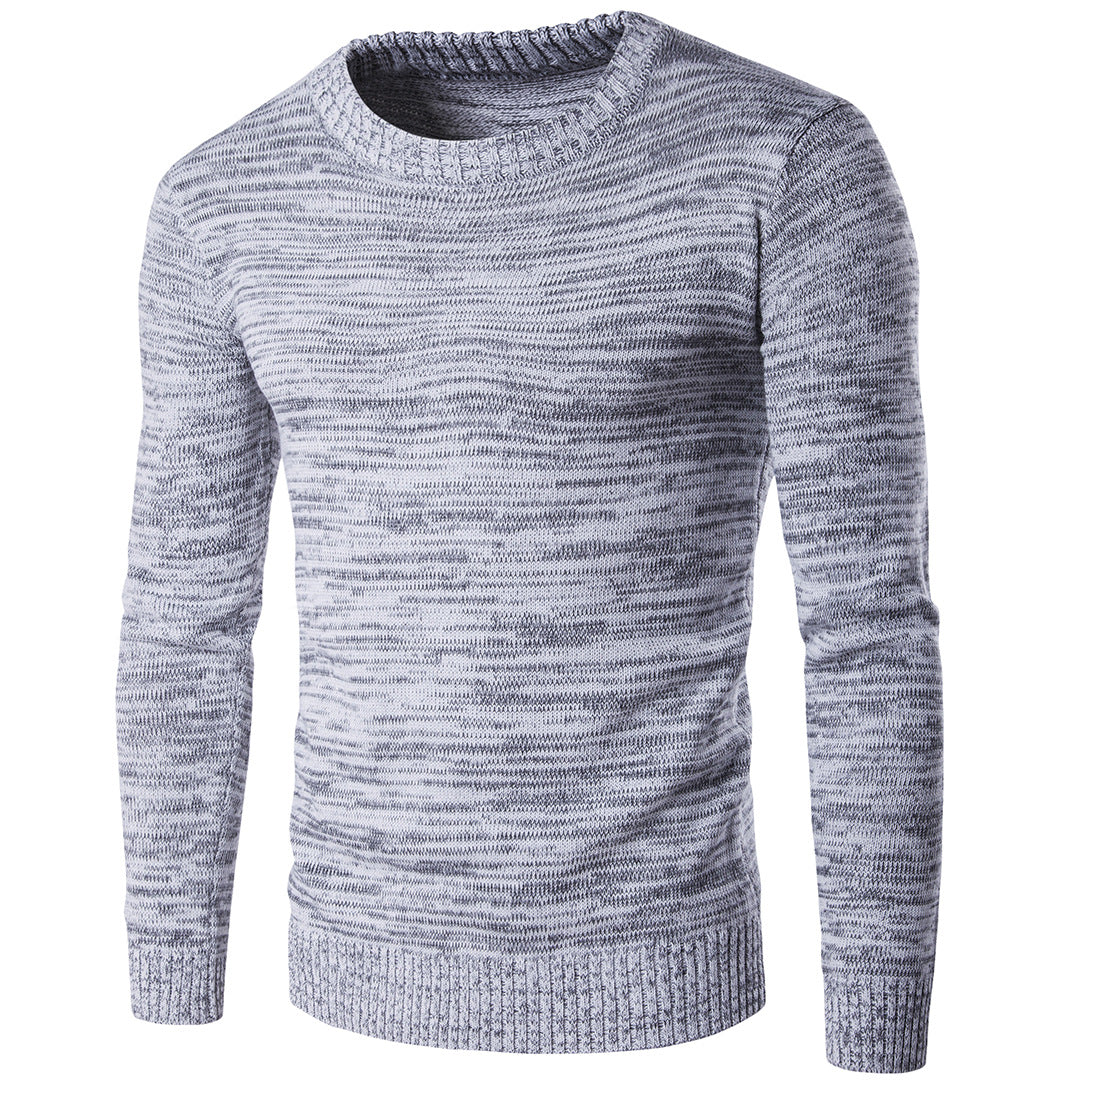 Men's sweater sweater